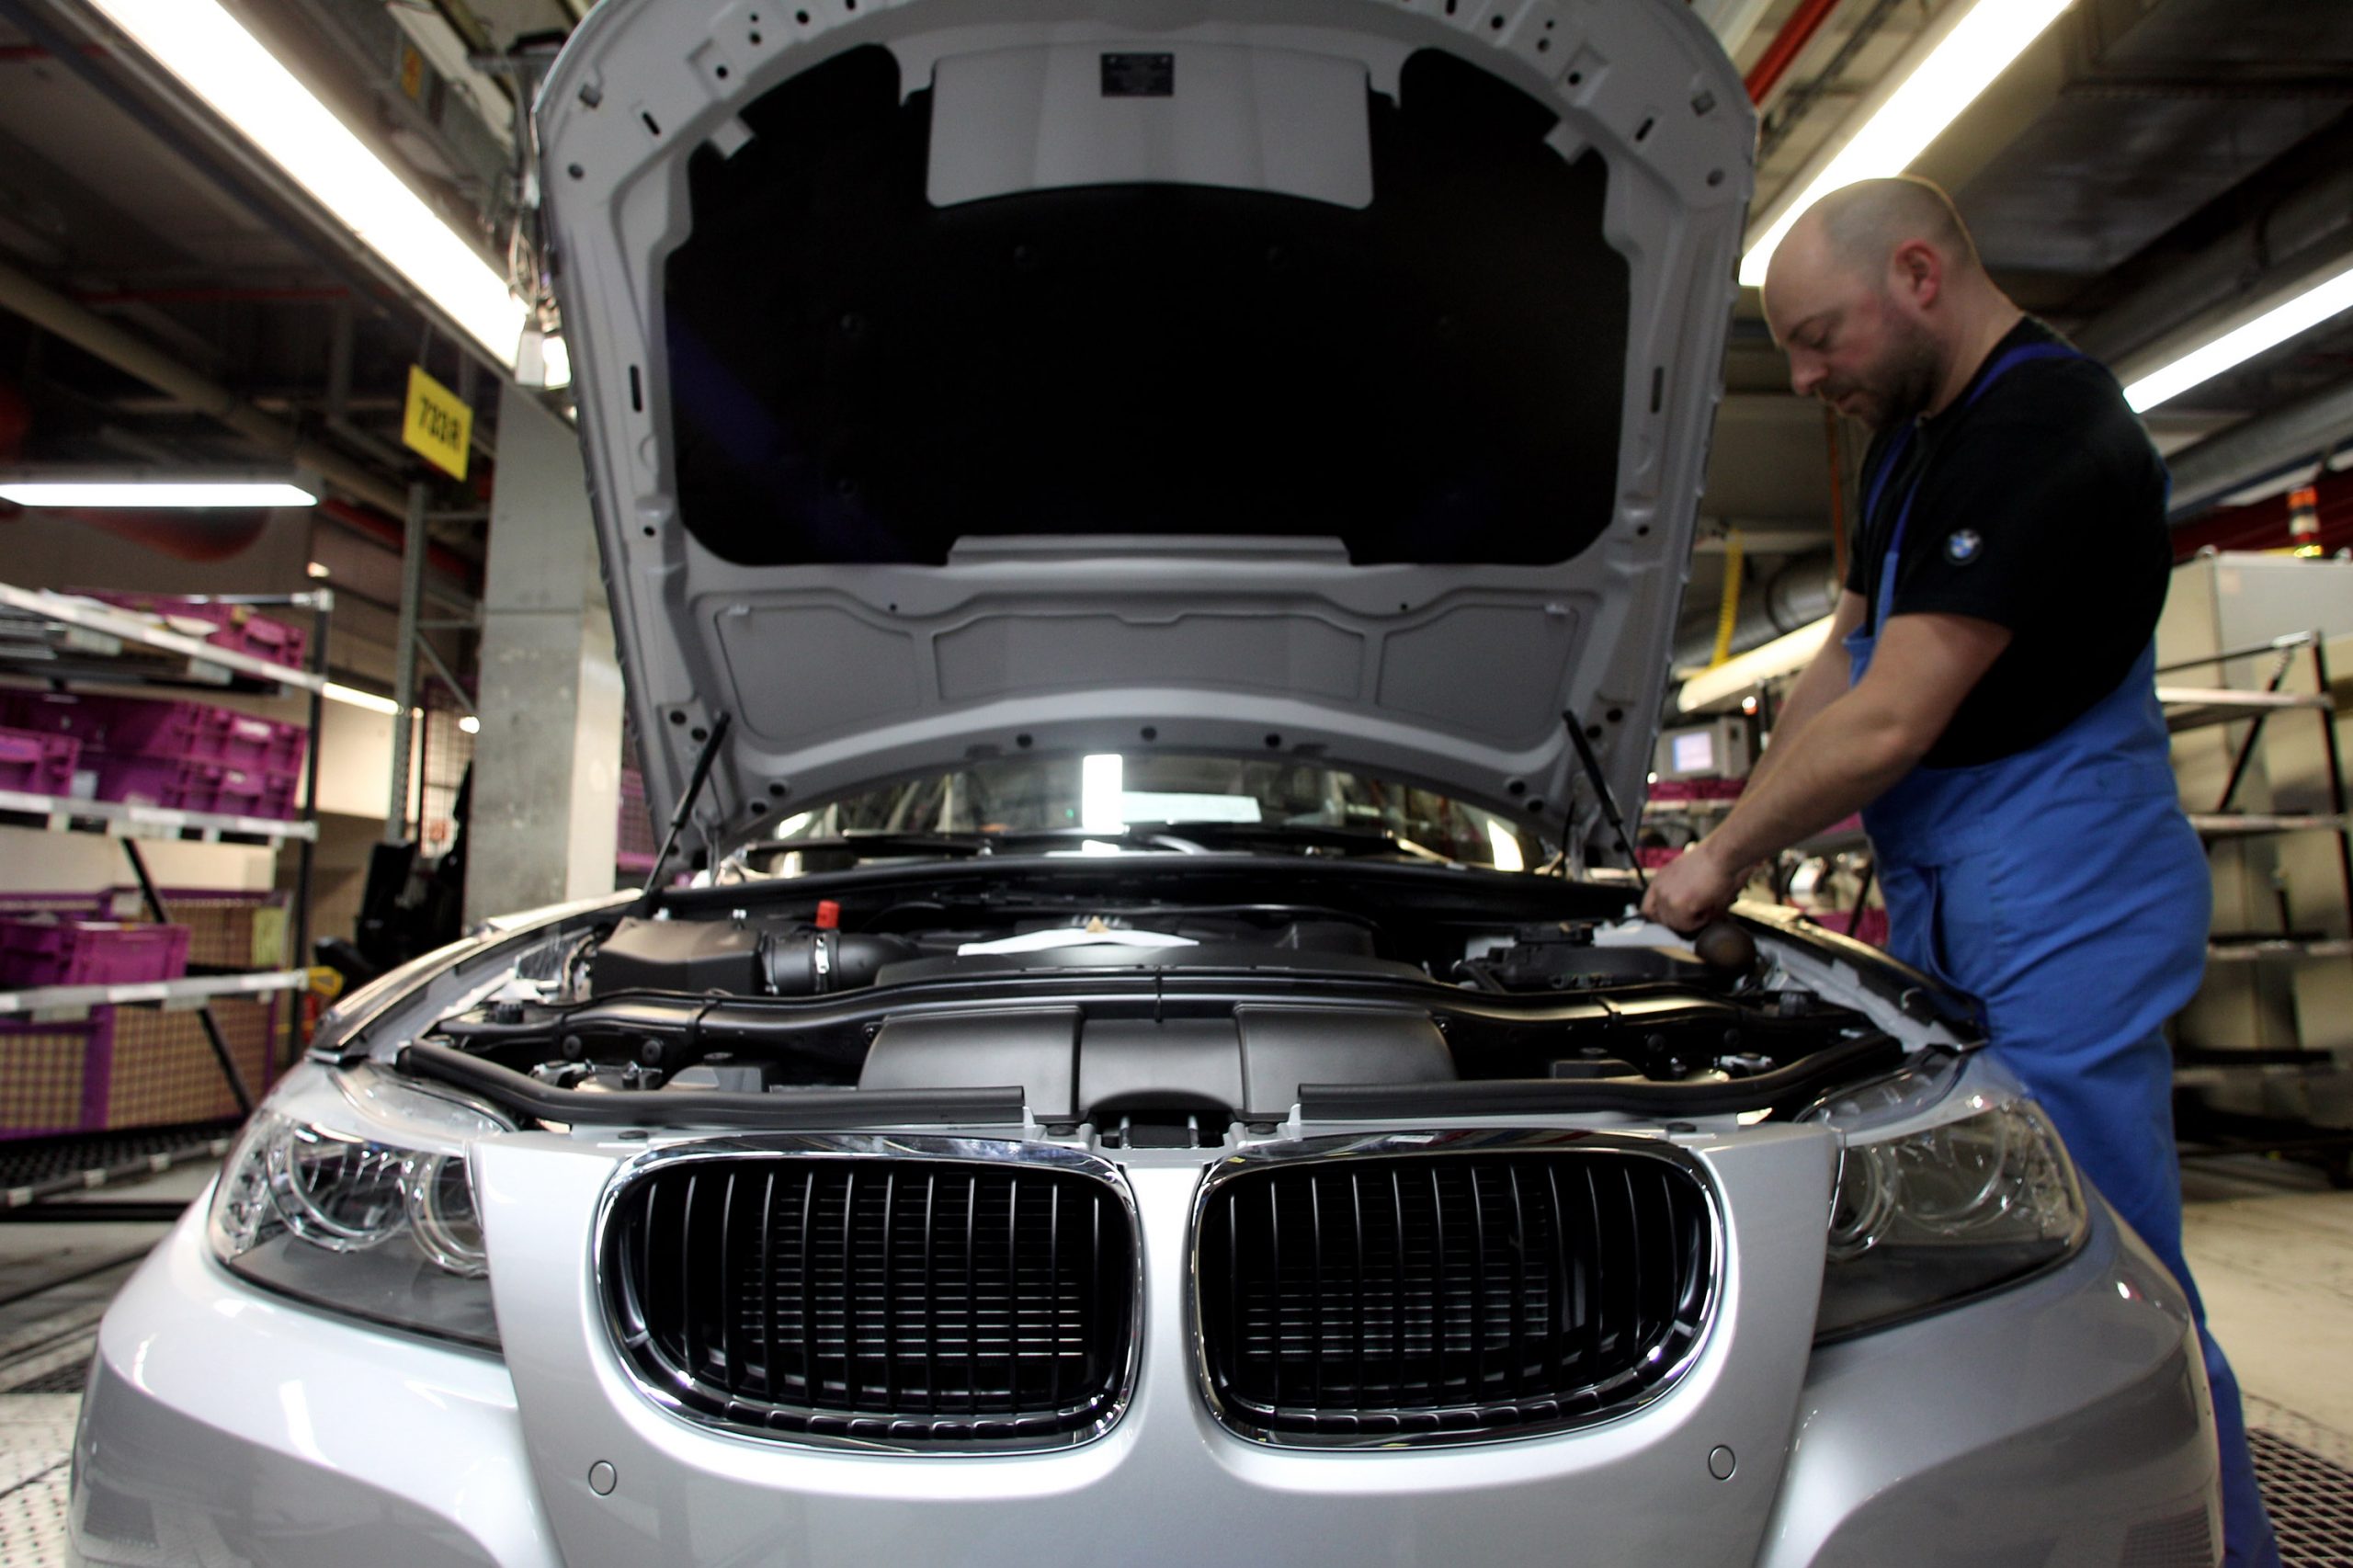 A mechanic works on a BMW 3 Series sedan in a shop